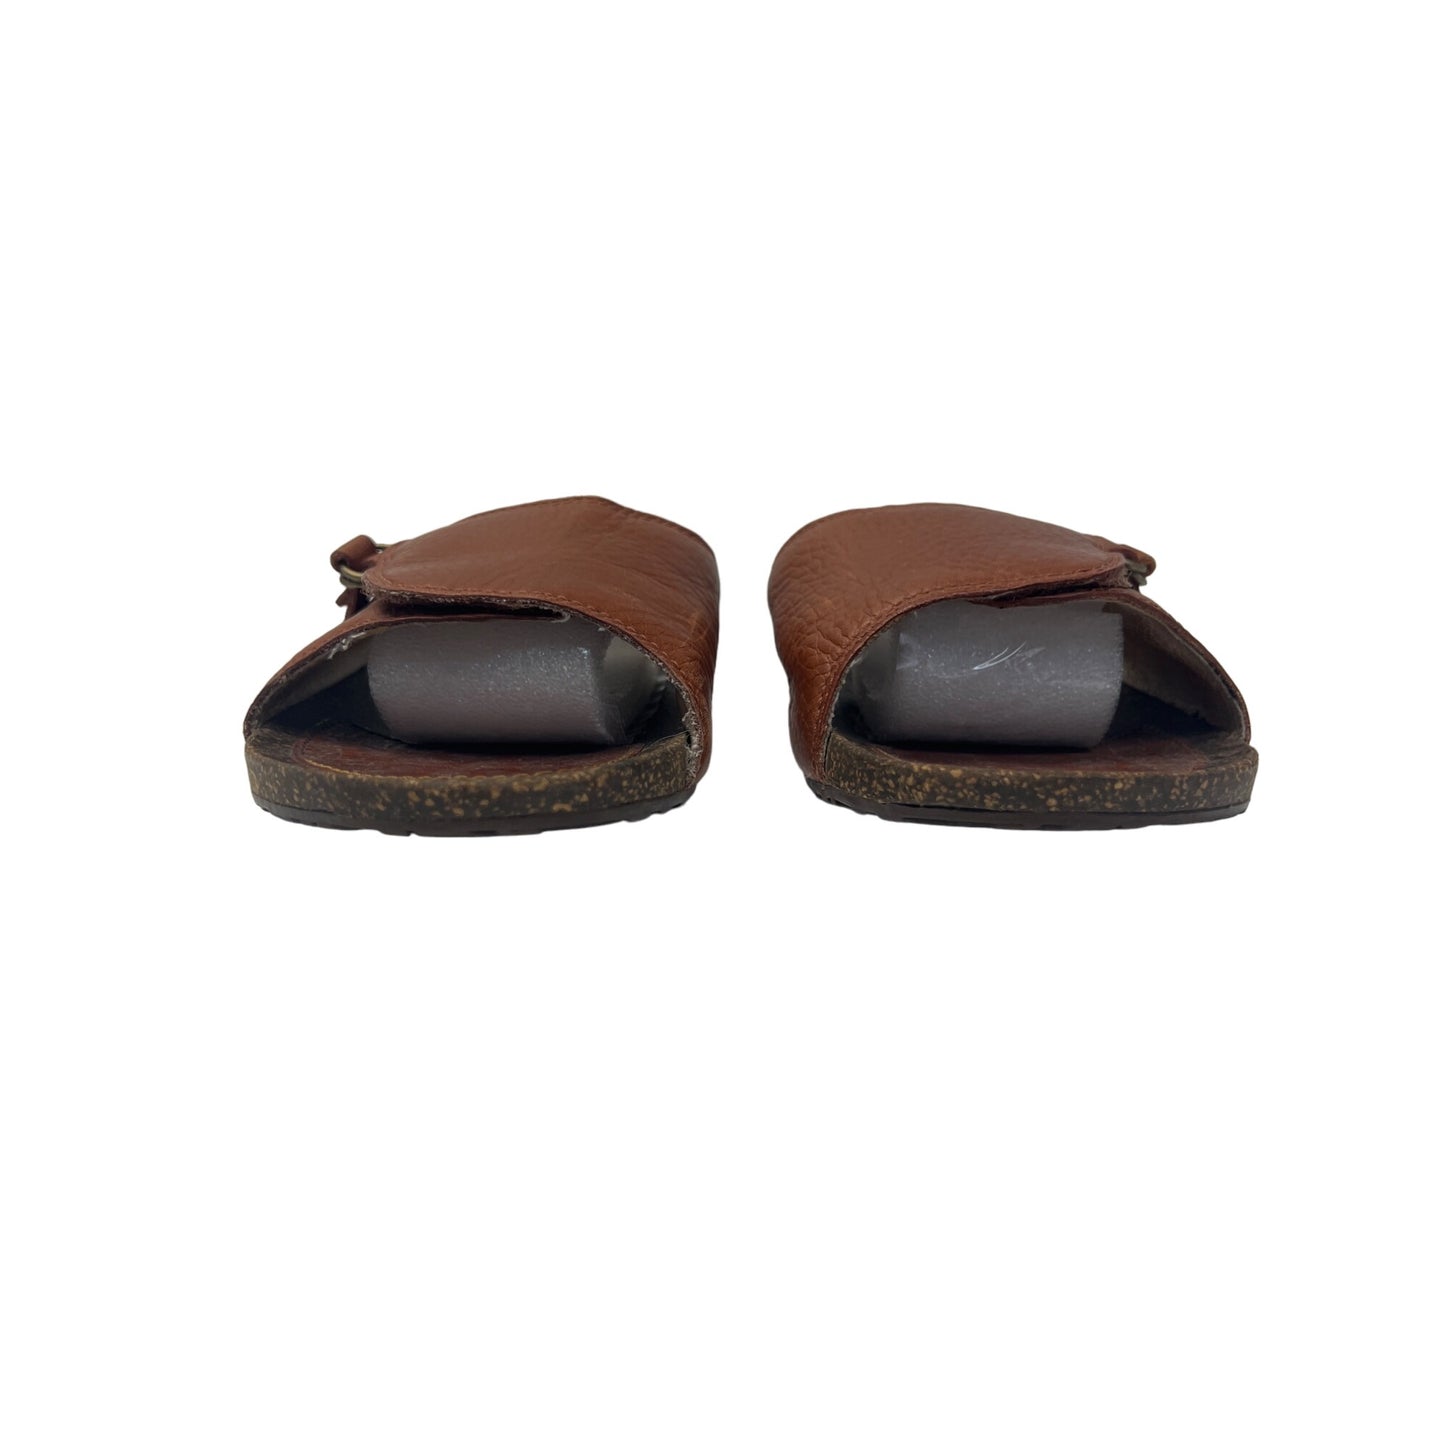 Teva Ventura Slide Brown Leather Sandals